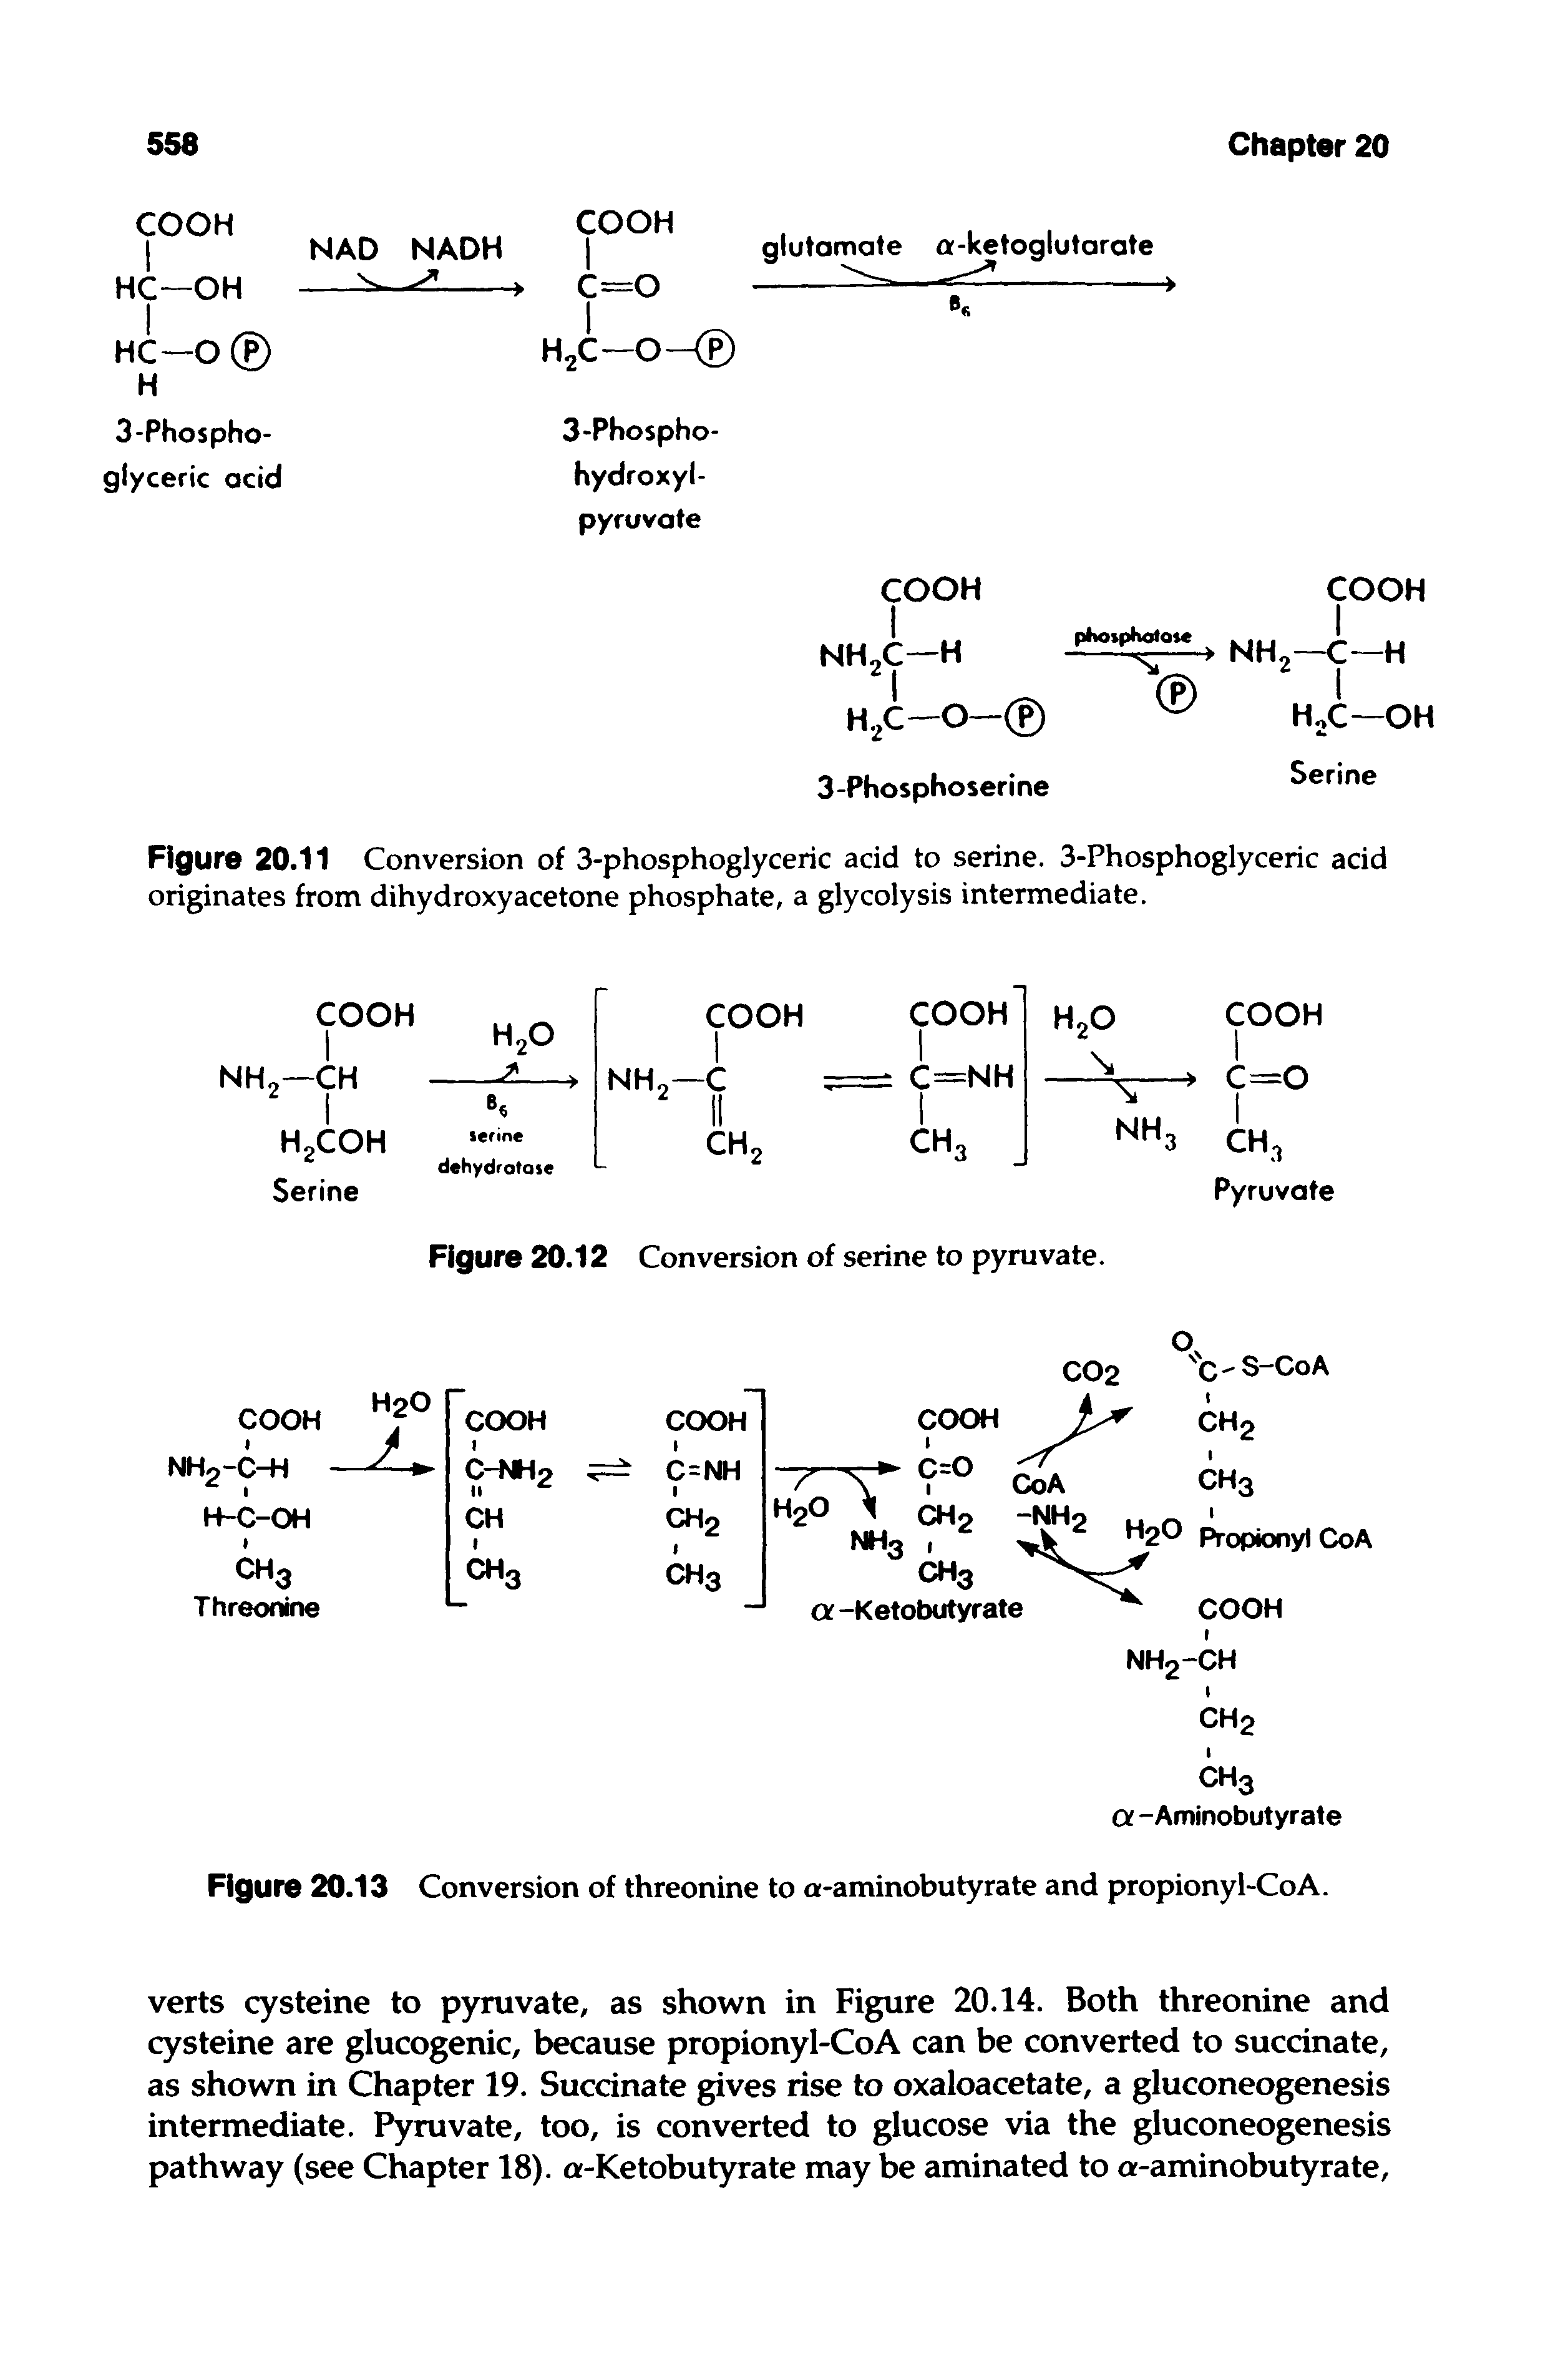 Figure 20.11 Conversion of 3-phosphoglyceric acid to serine. 3-Phosphoglyceric acid originates from dihydroxyacetone phosphate, a glycolysis intermediate.